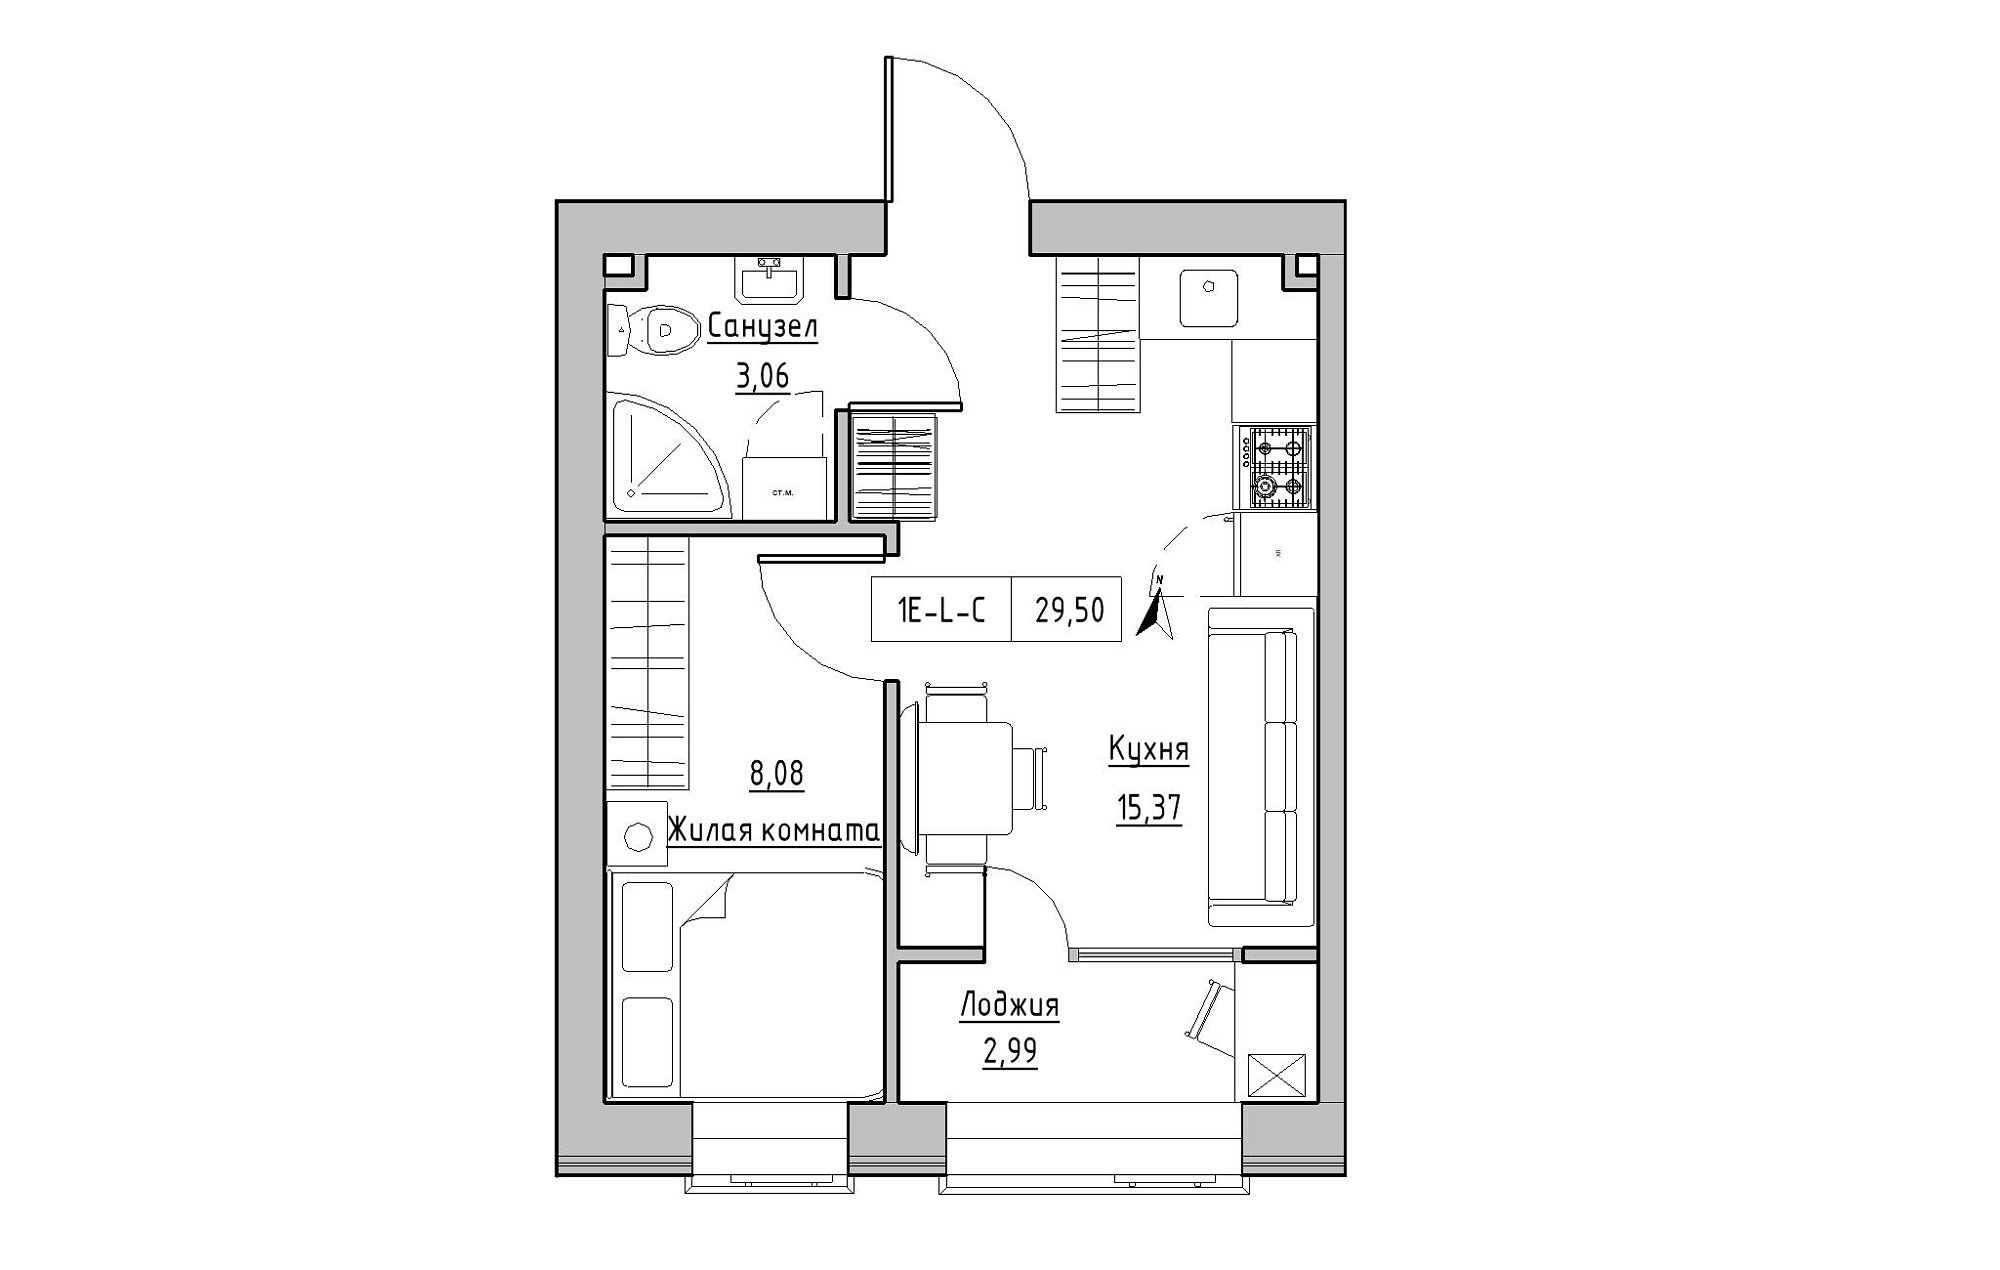 Planning 1-rm flats area 29.5m2, KS-019-04/0010.